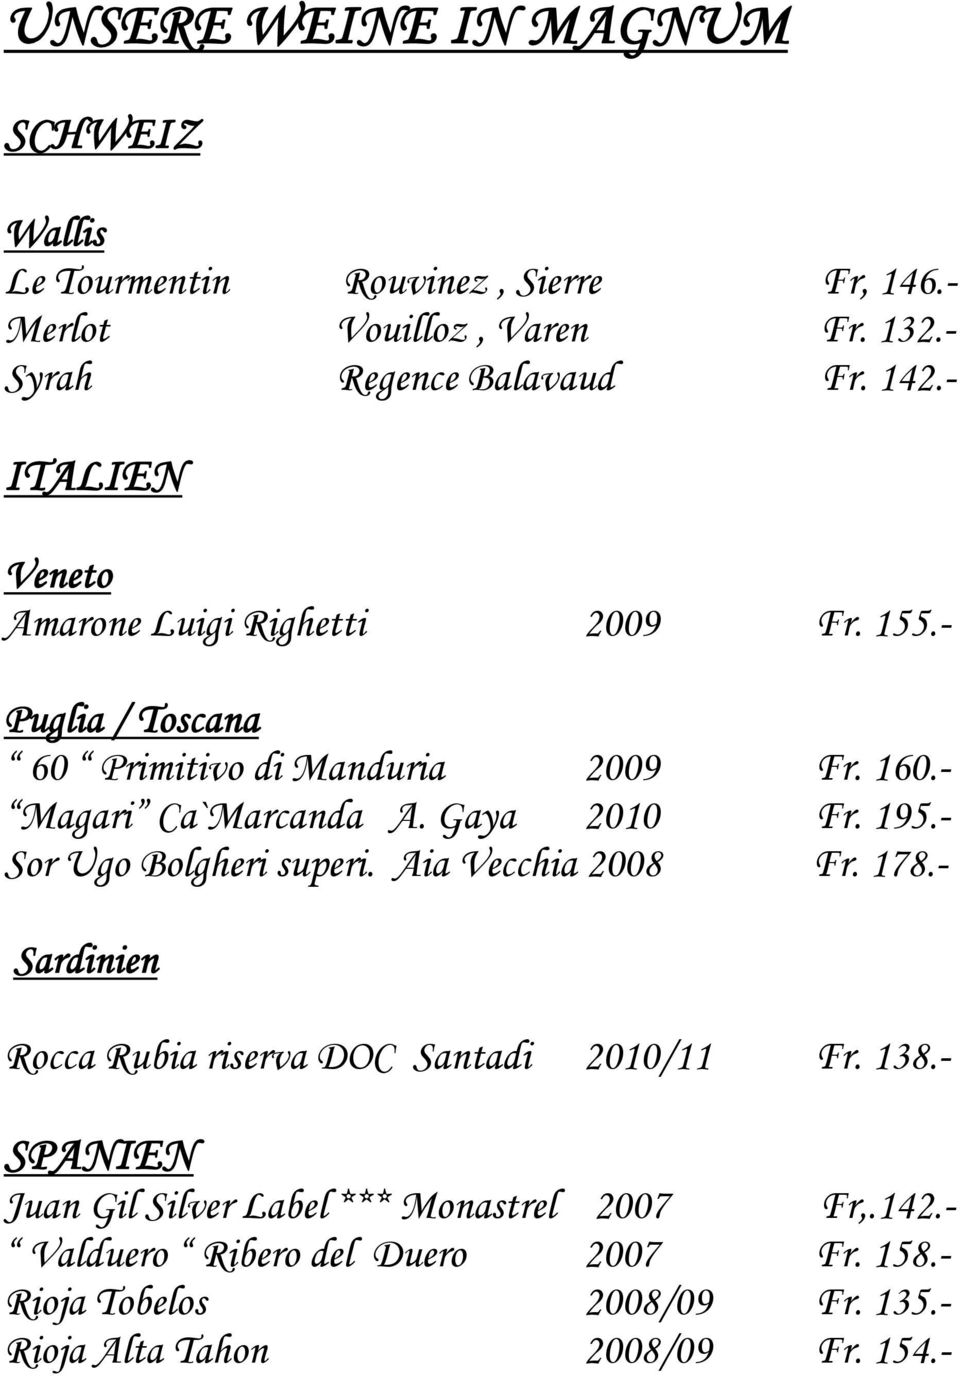 Gaya 2010 Fr. 195.- Sor Ugo Bolgheri superi. Aia Vecchia 2008 Fr. 178.- Sardinien Rocca Rubia riserva DOC Santadi 2010/11 Fr. 138.